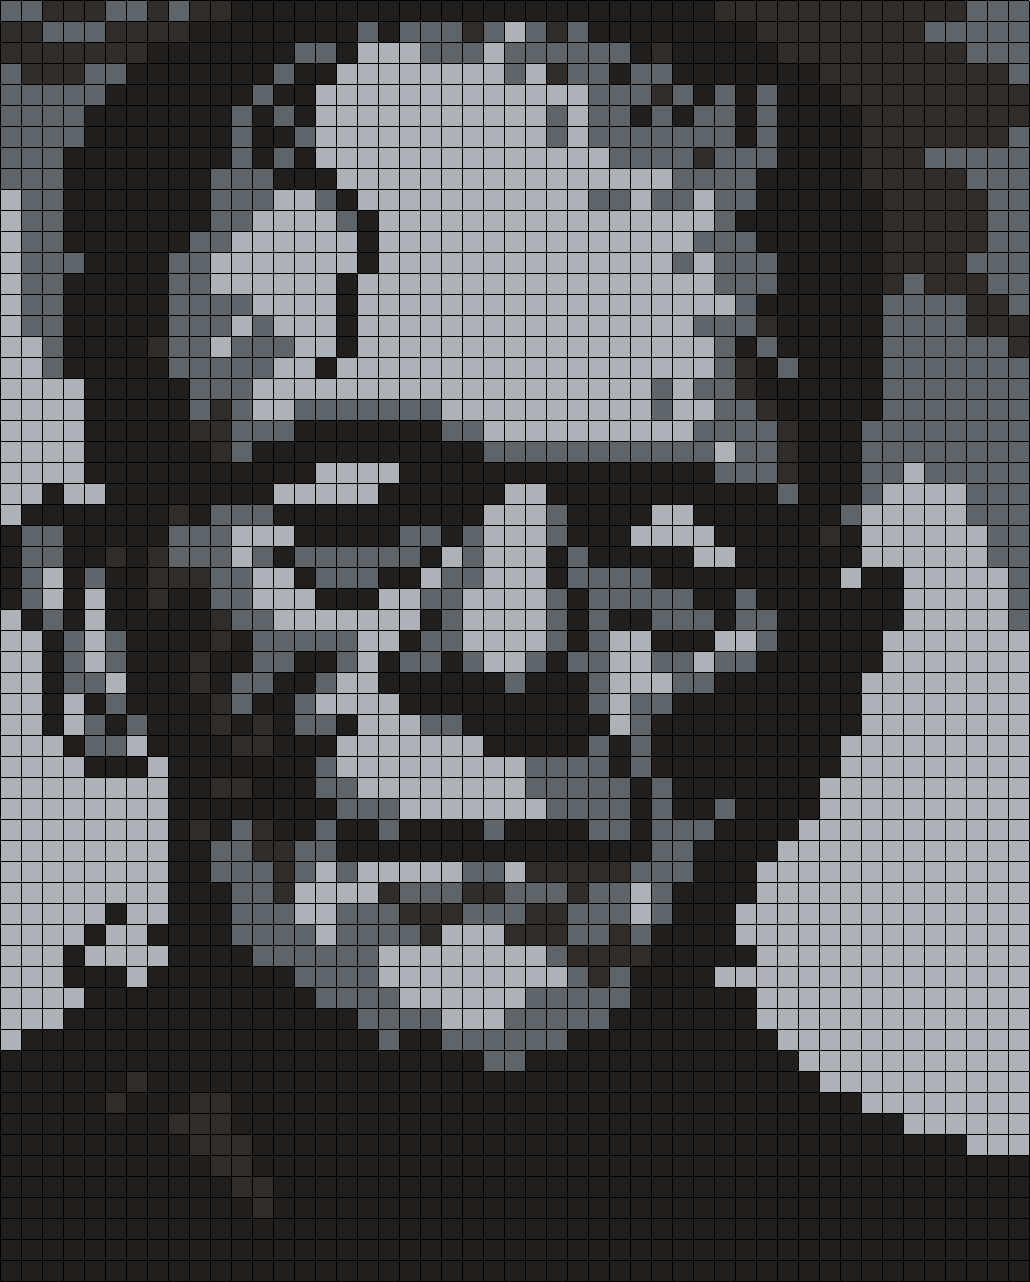 Boris Karloff As Frankenstein (Square)